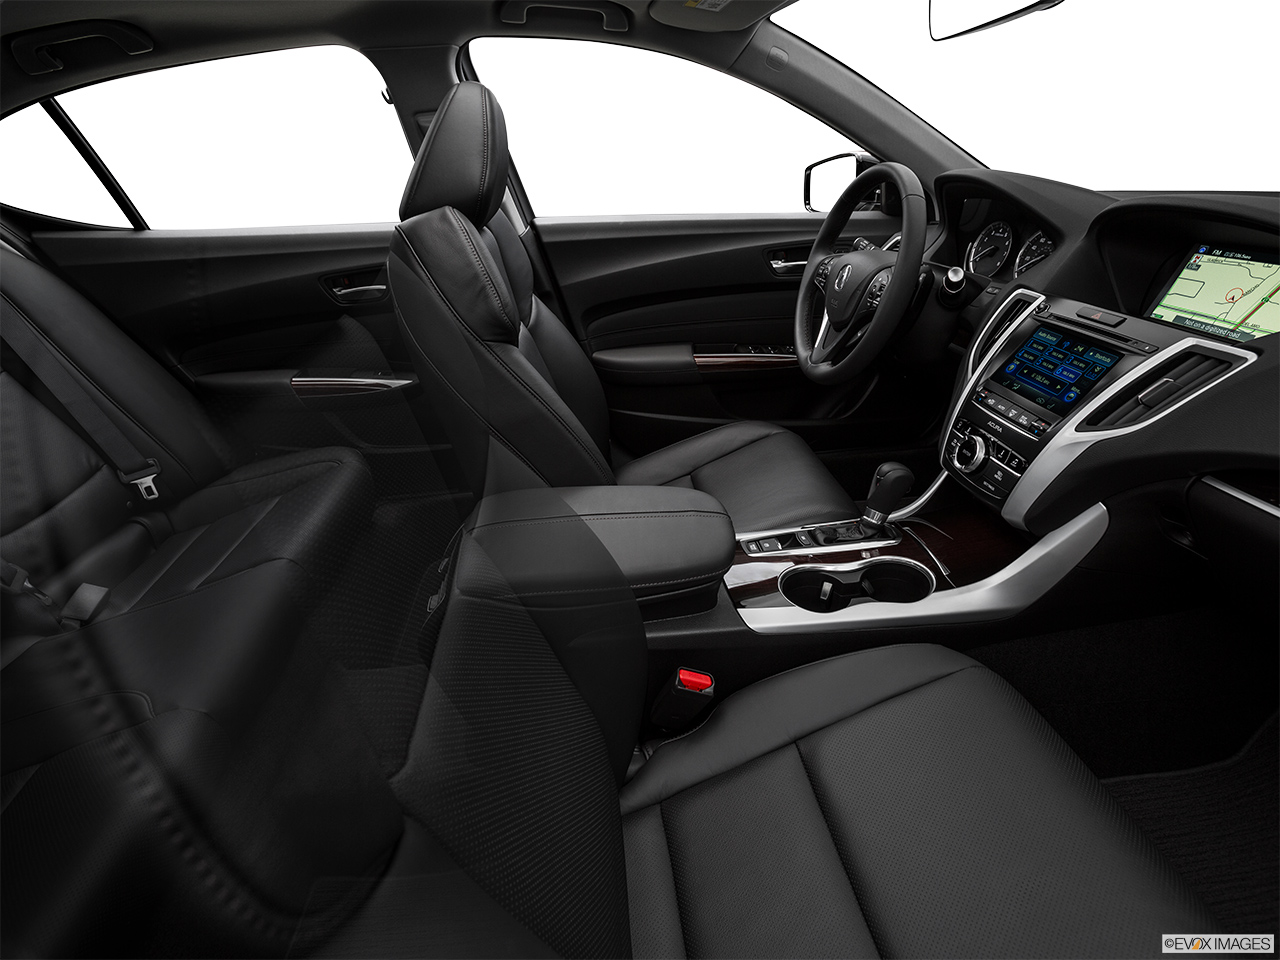 2017 Acura TLX 2.4 8-DCP P-AWS Fake Buck Shot - Interior from Passenger B pillar. 